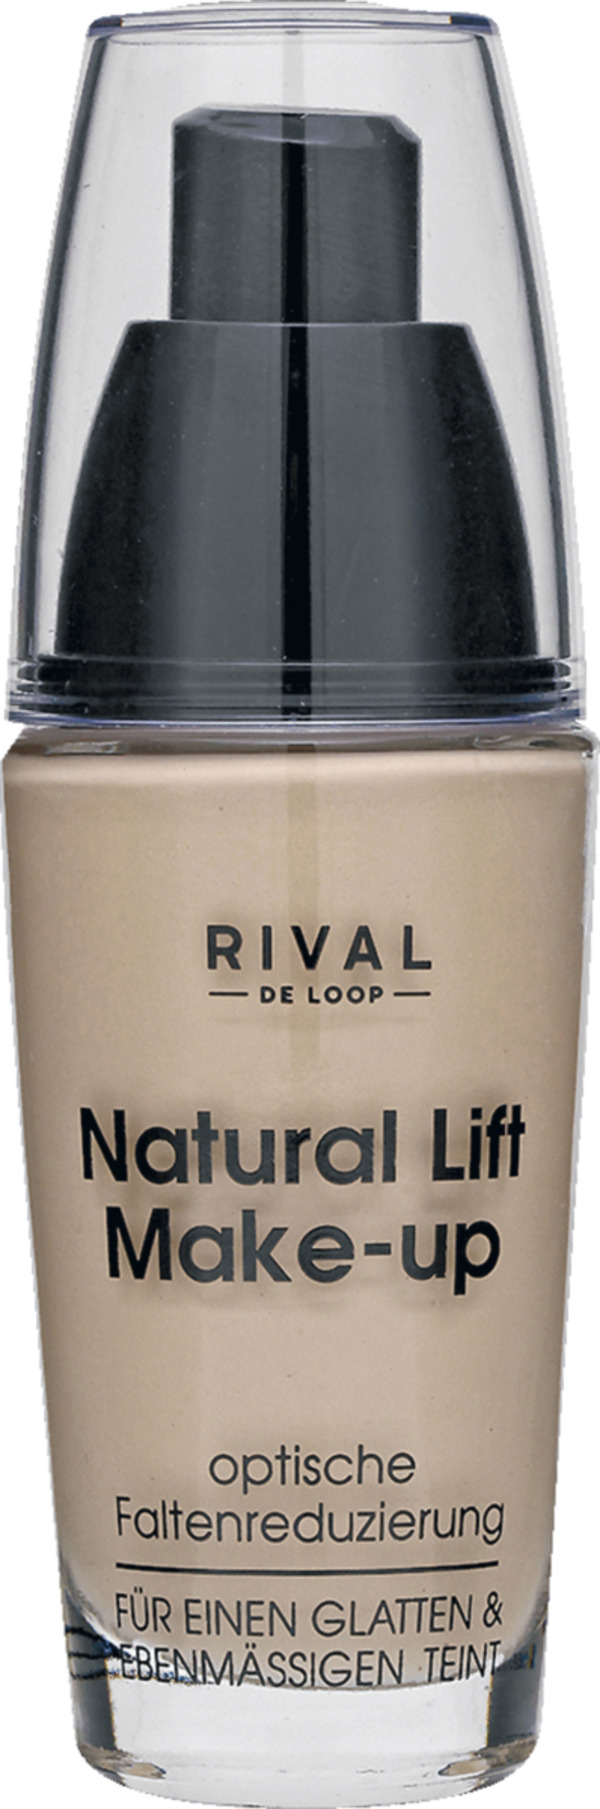 Bild 1 von Rival de Loop Natural Lift Make-up 06 Natural Marble 9.30 EUR/100 ml